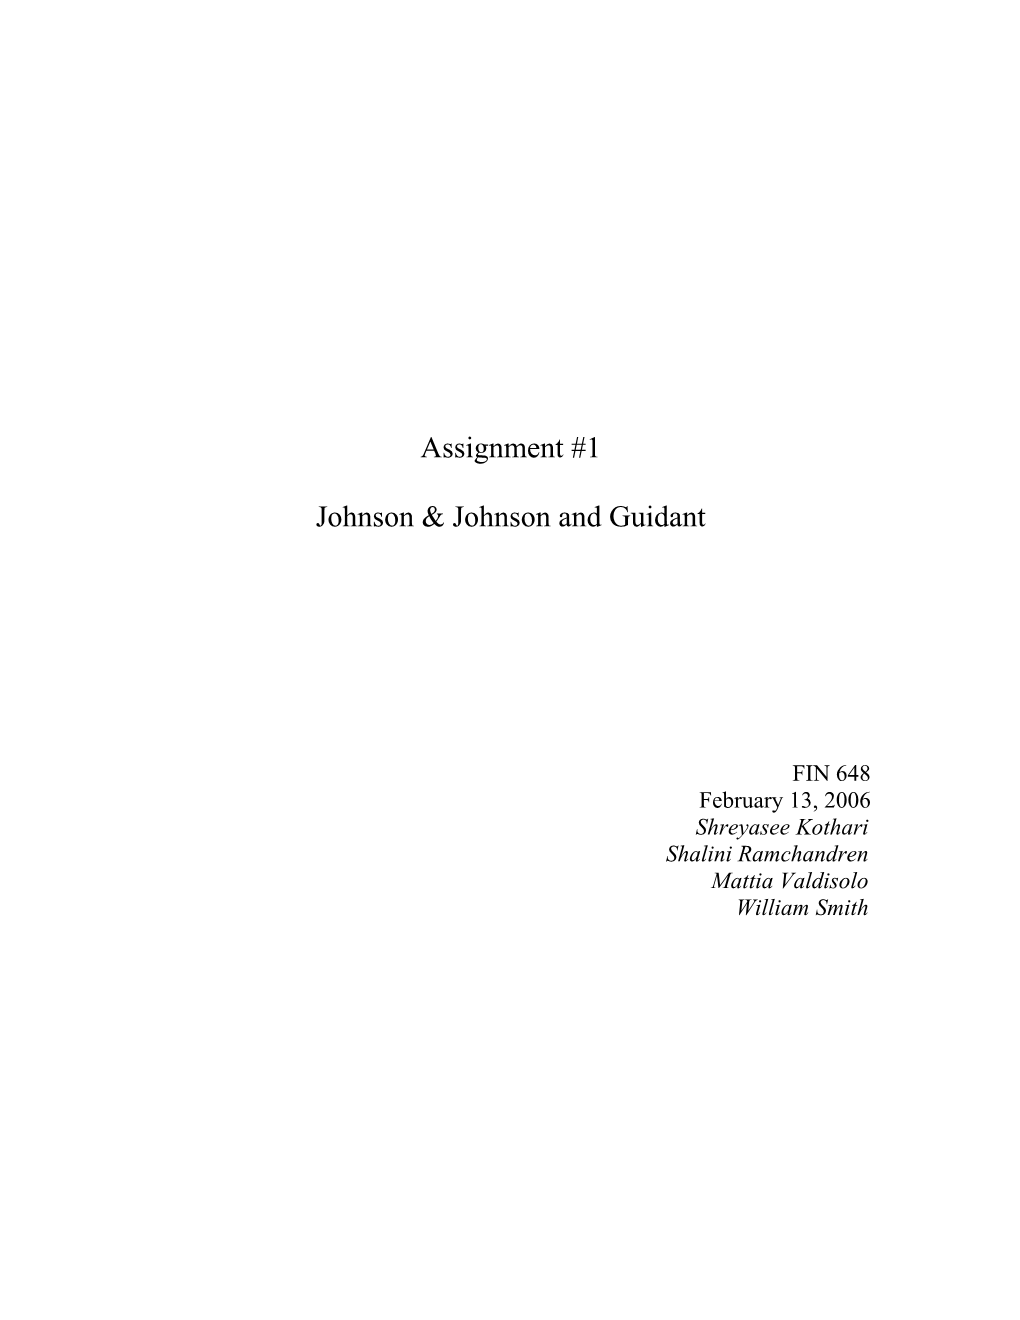 Johnson & Johnson and Guidant